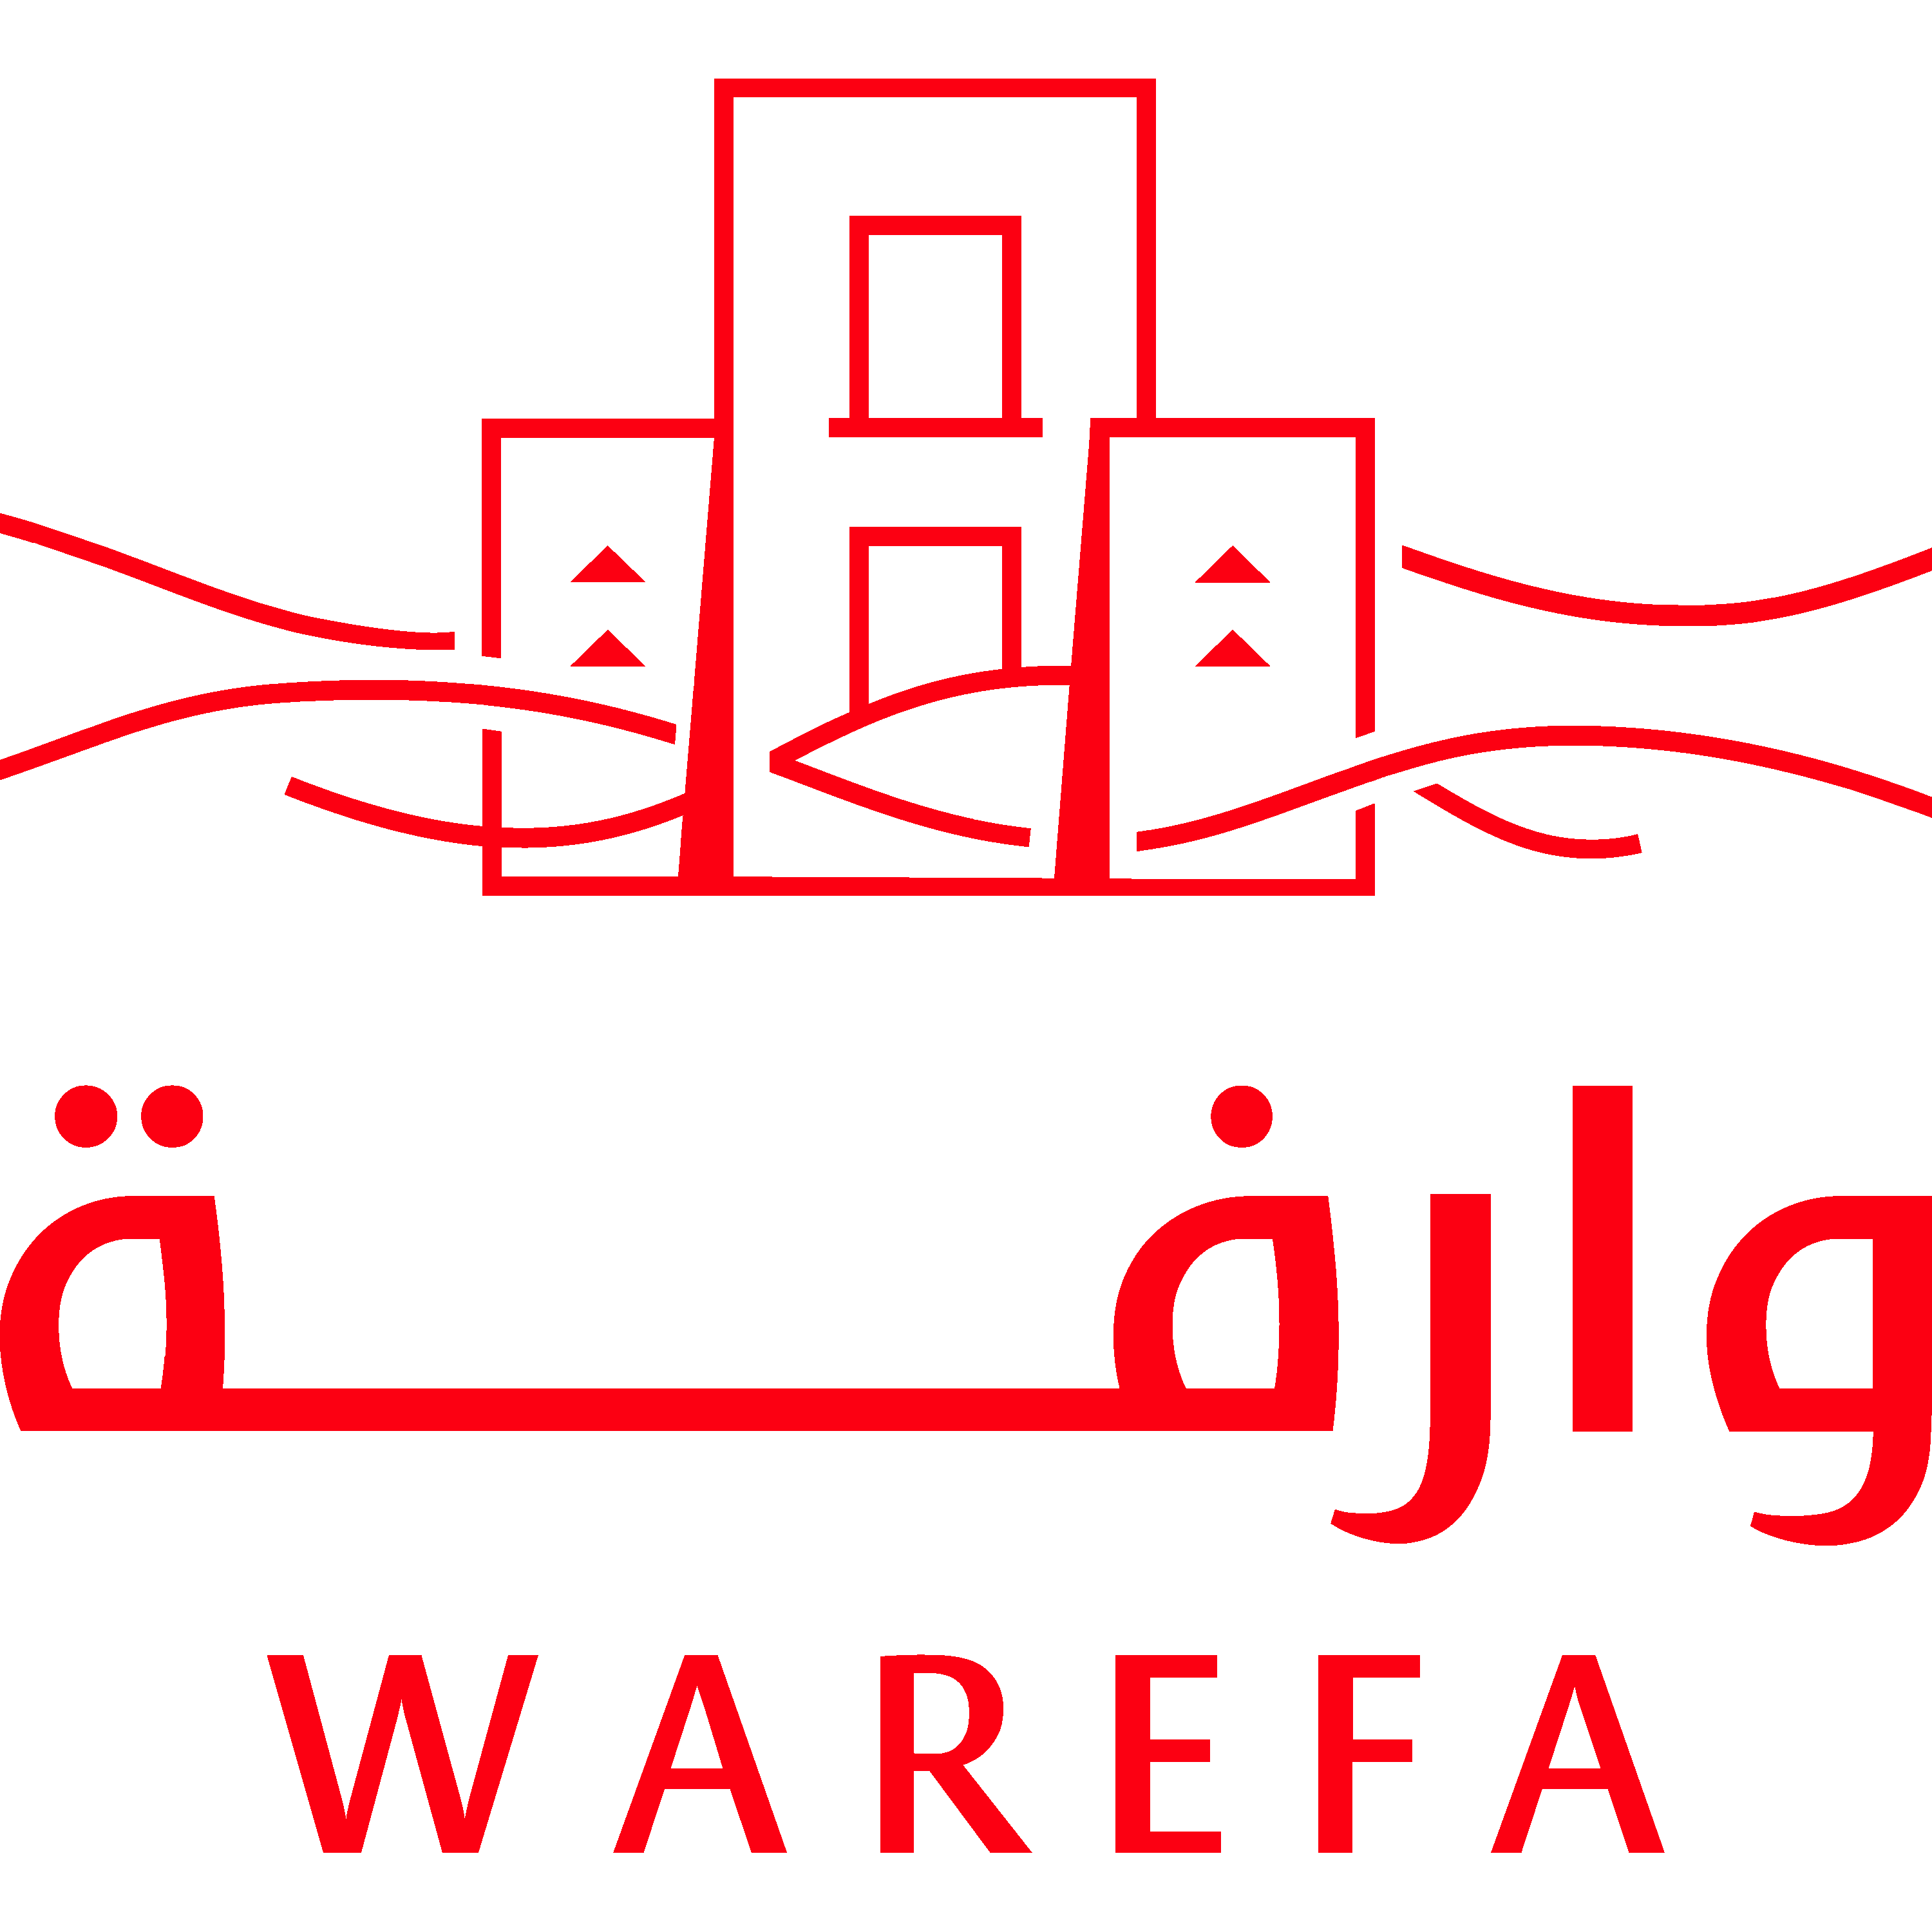 Warefa Logo  Transparent Gallery